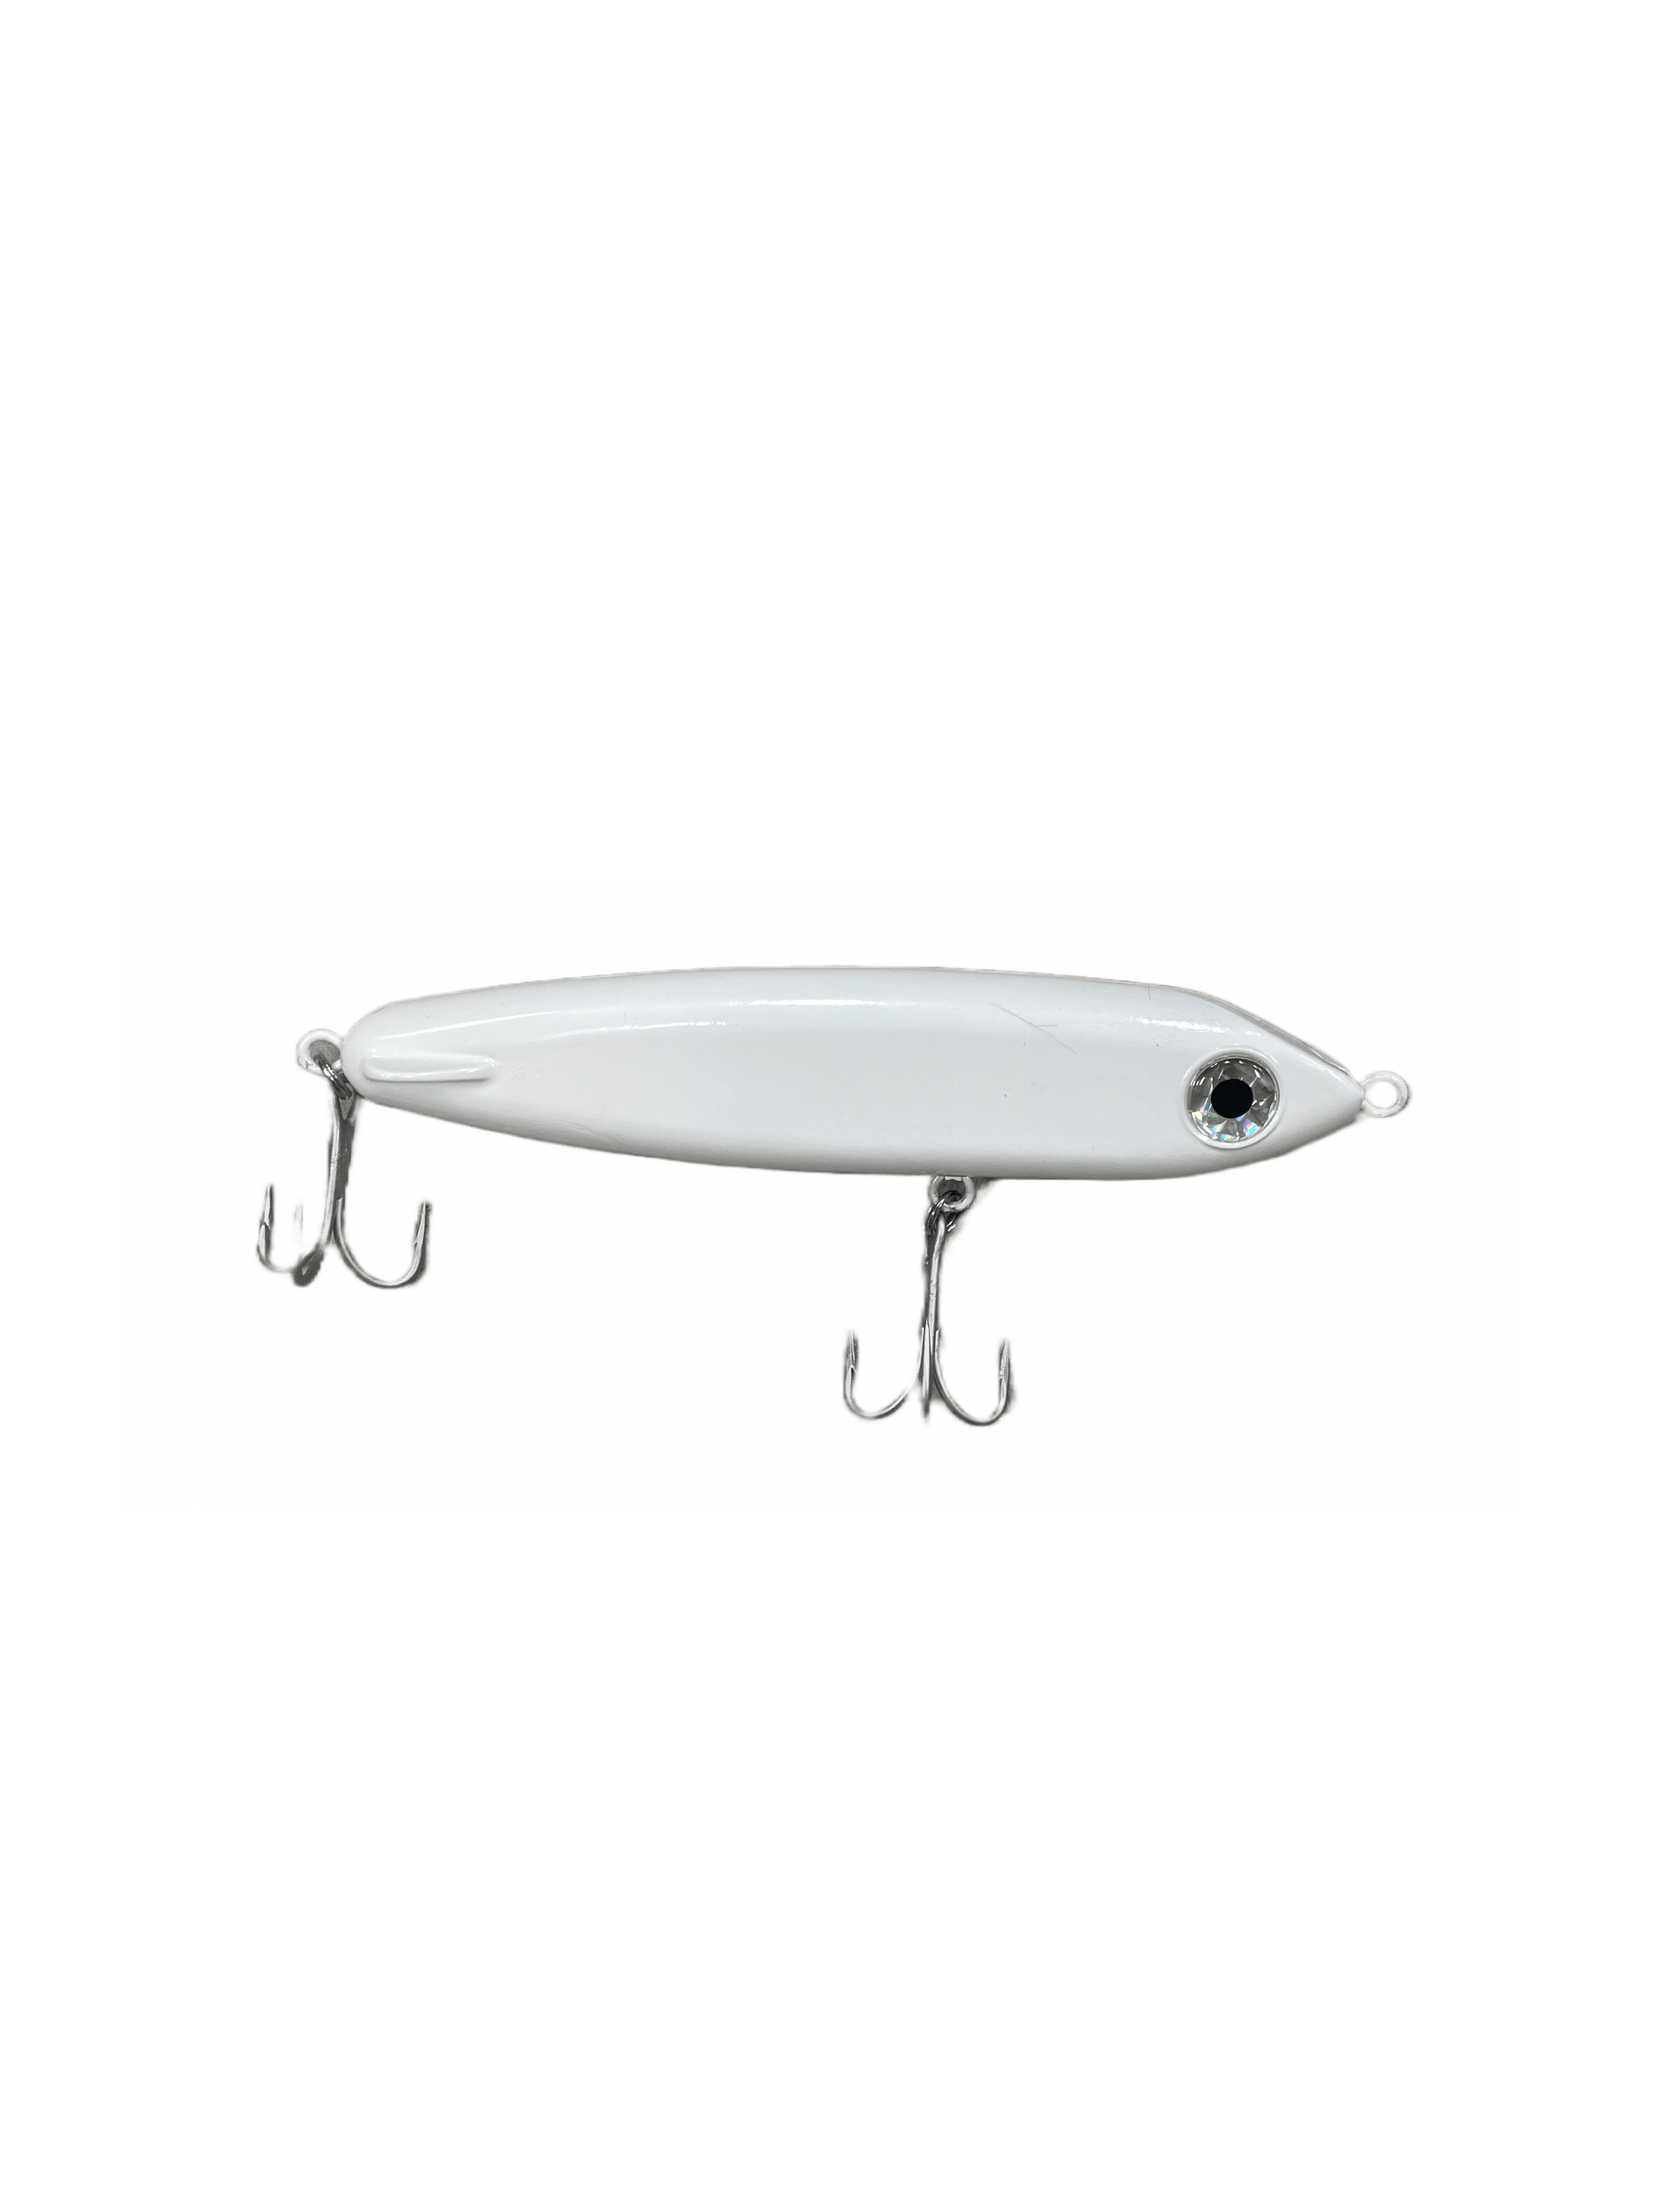  10 RF Glider Glide Bait Bass Musky Striper Fishing